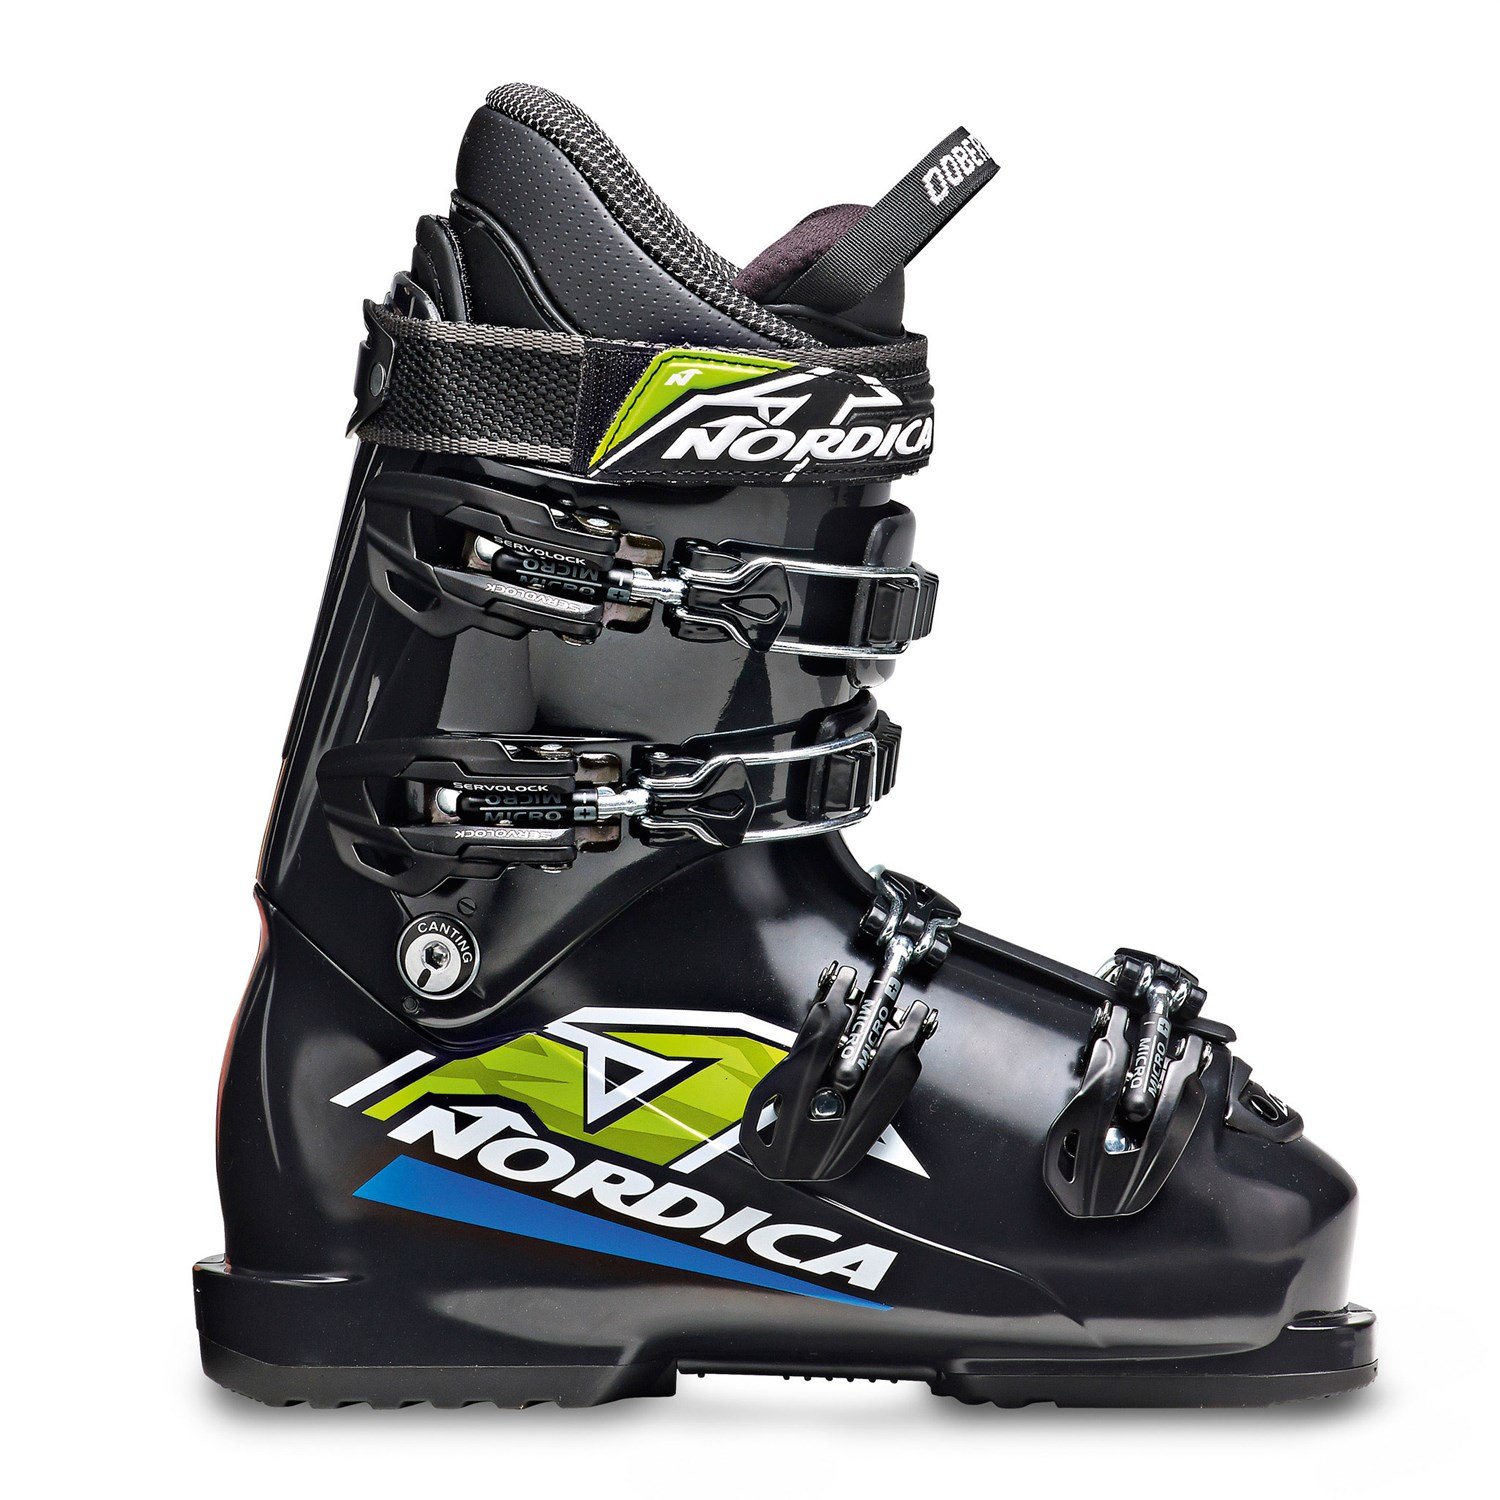 size 4 ski boots